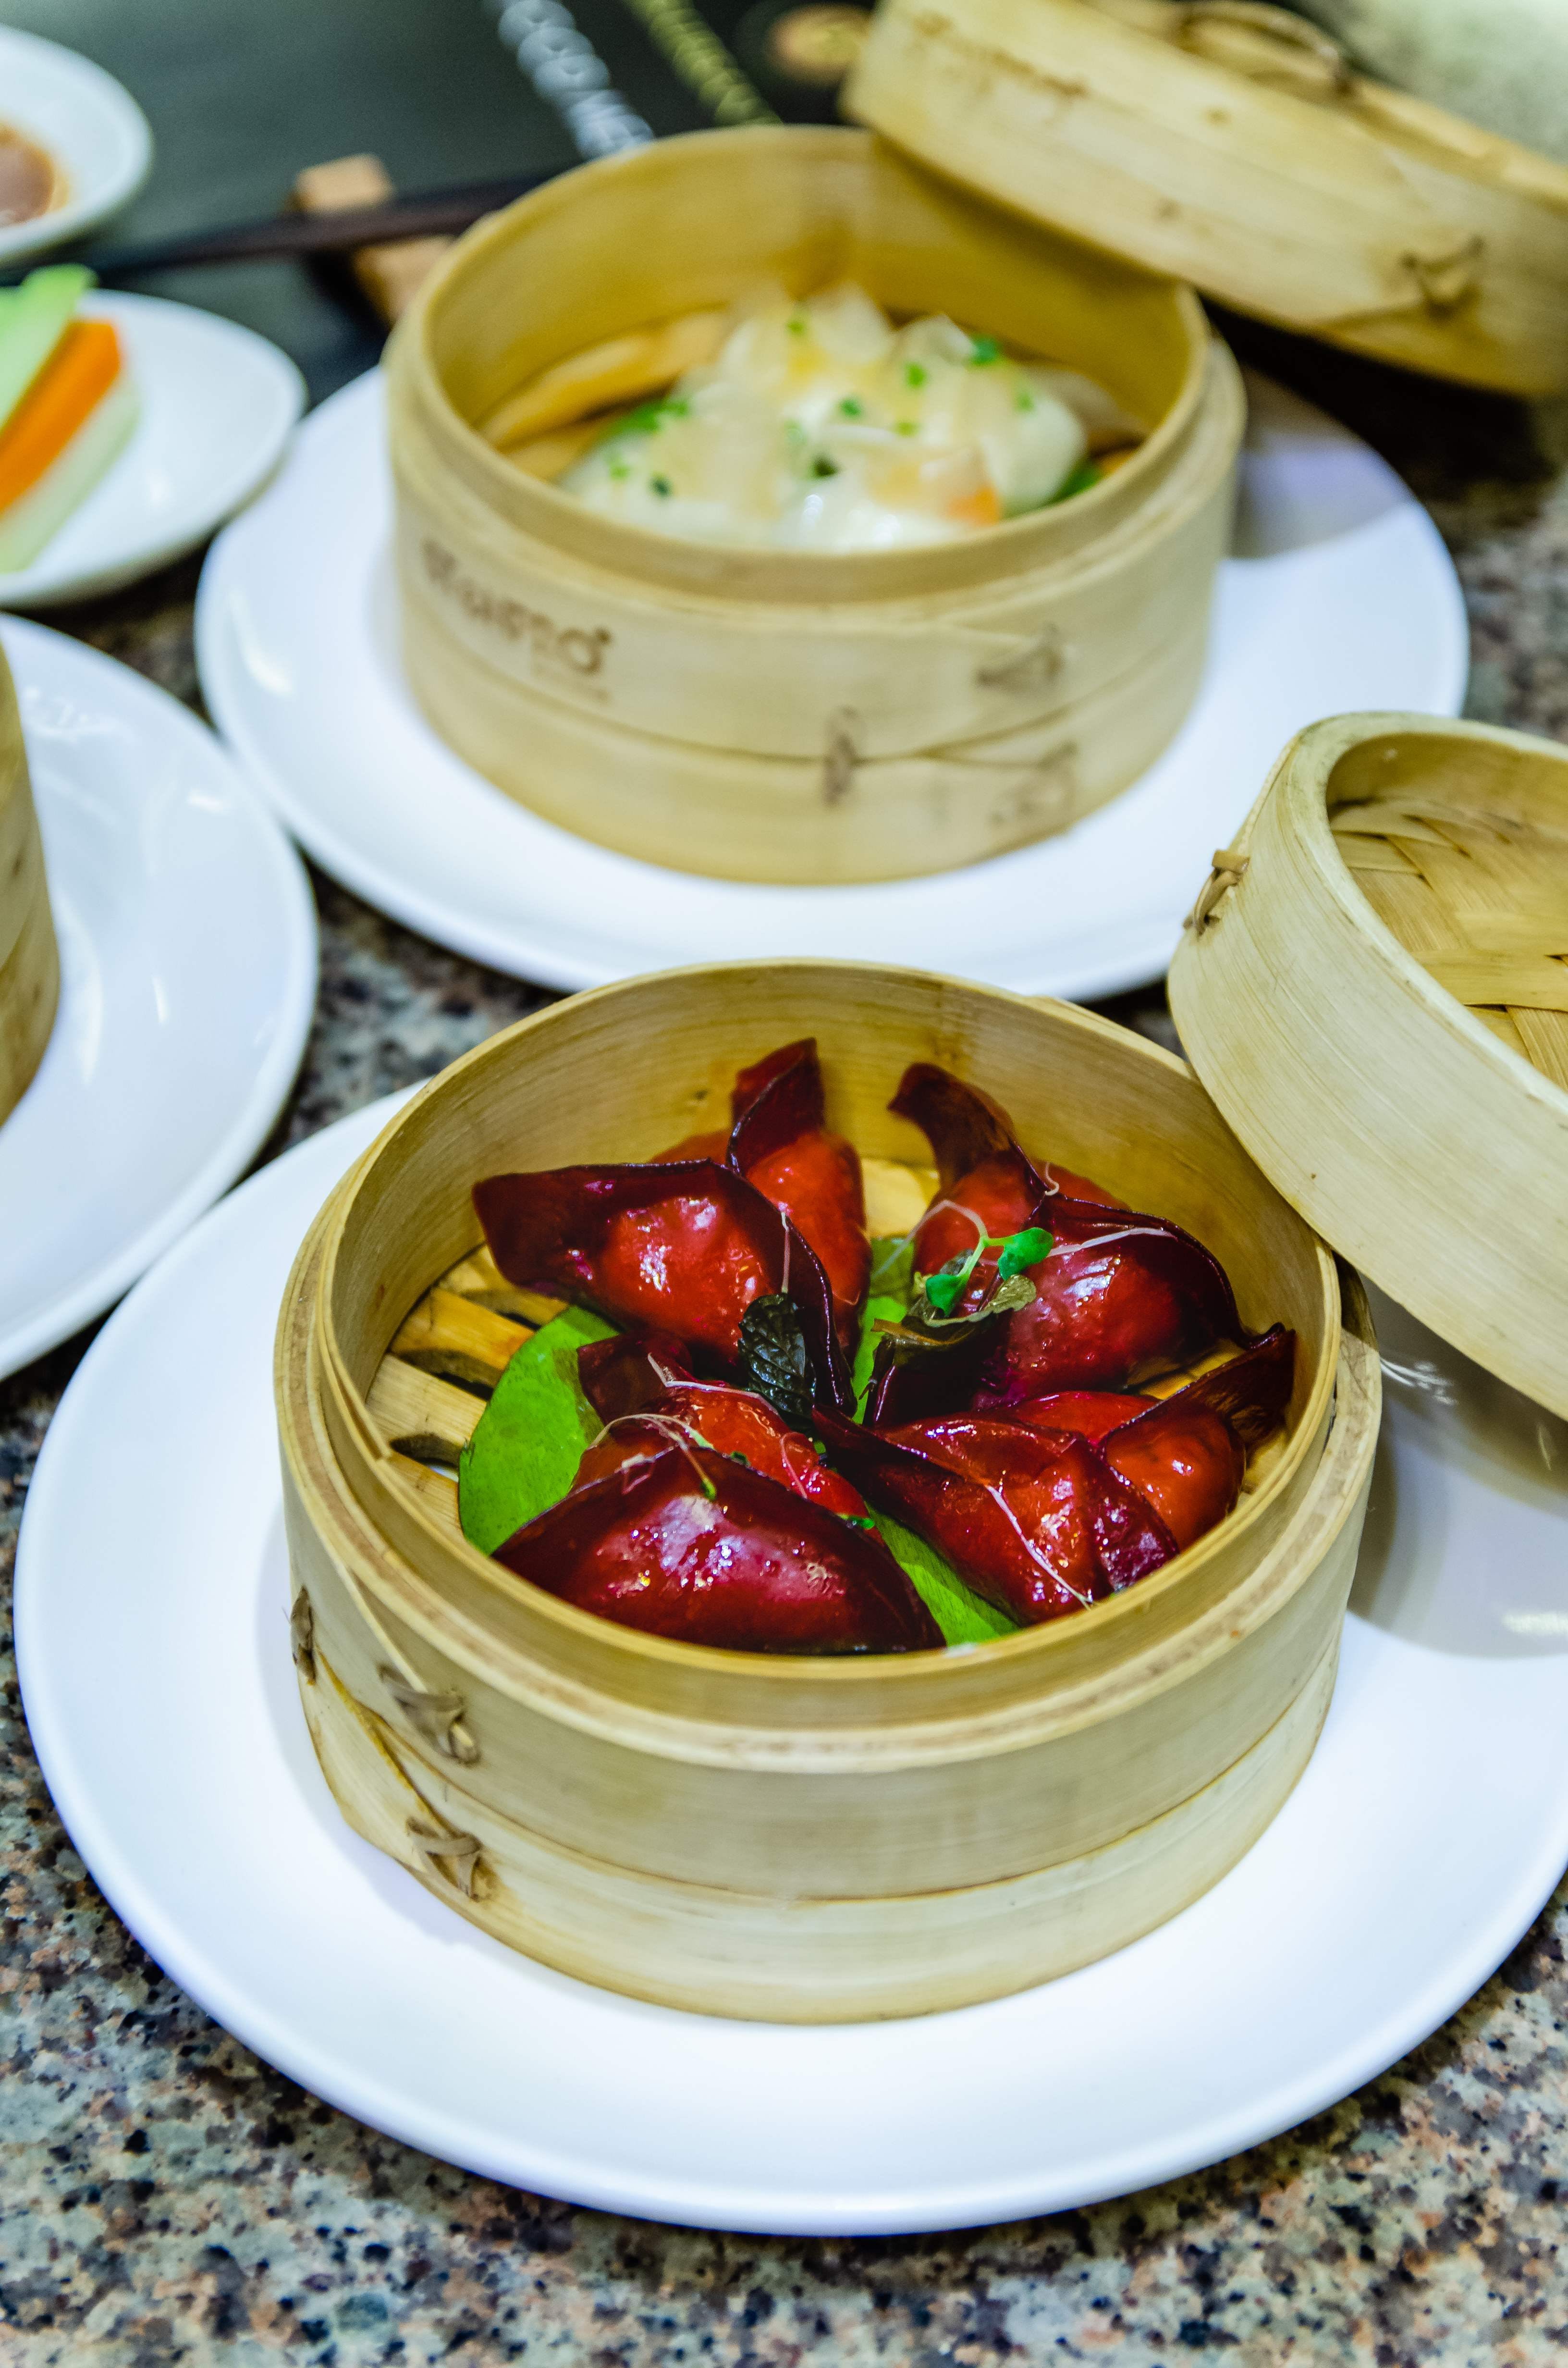 Dish,Food,Cuisine,Ingredient,Dim sum,Produce,Chinese food,Comfort food,Lunch,Huaiyang cuisine